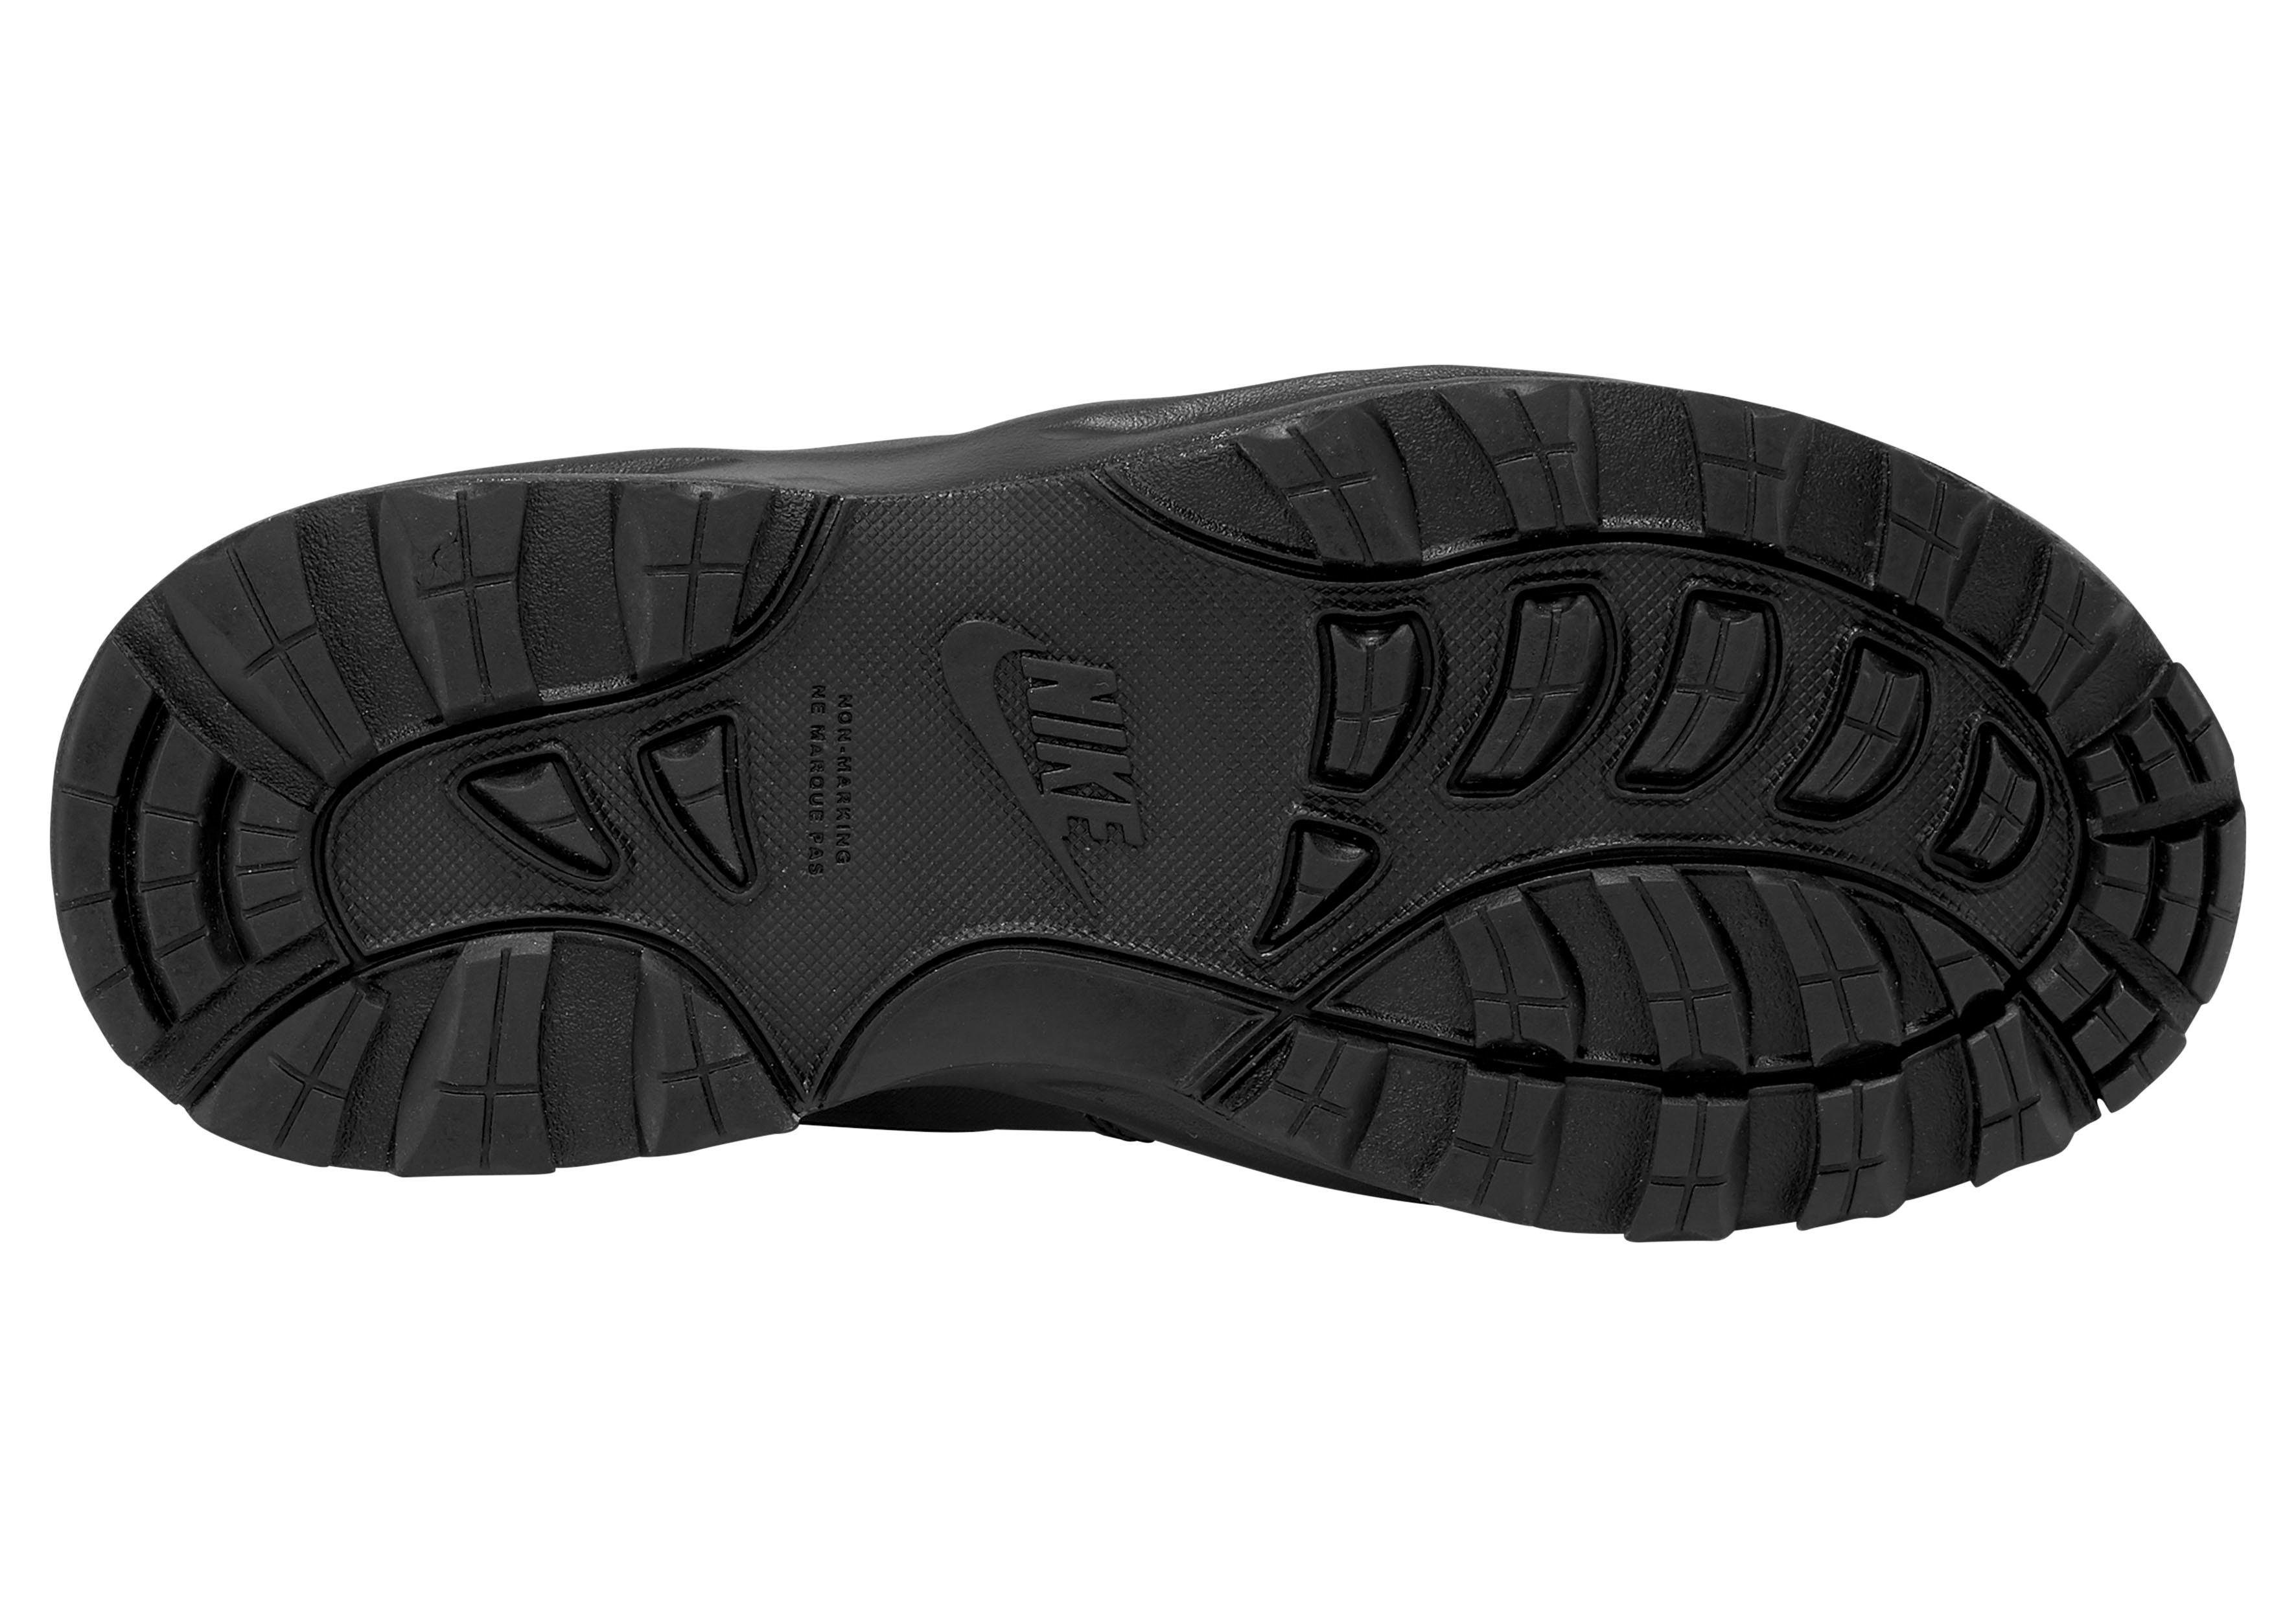 Nike Sportswear Manoa Leather Schnürboots schwarz